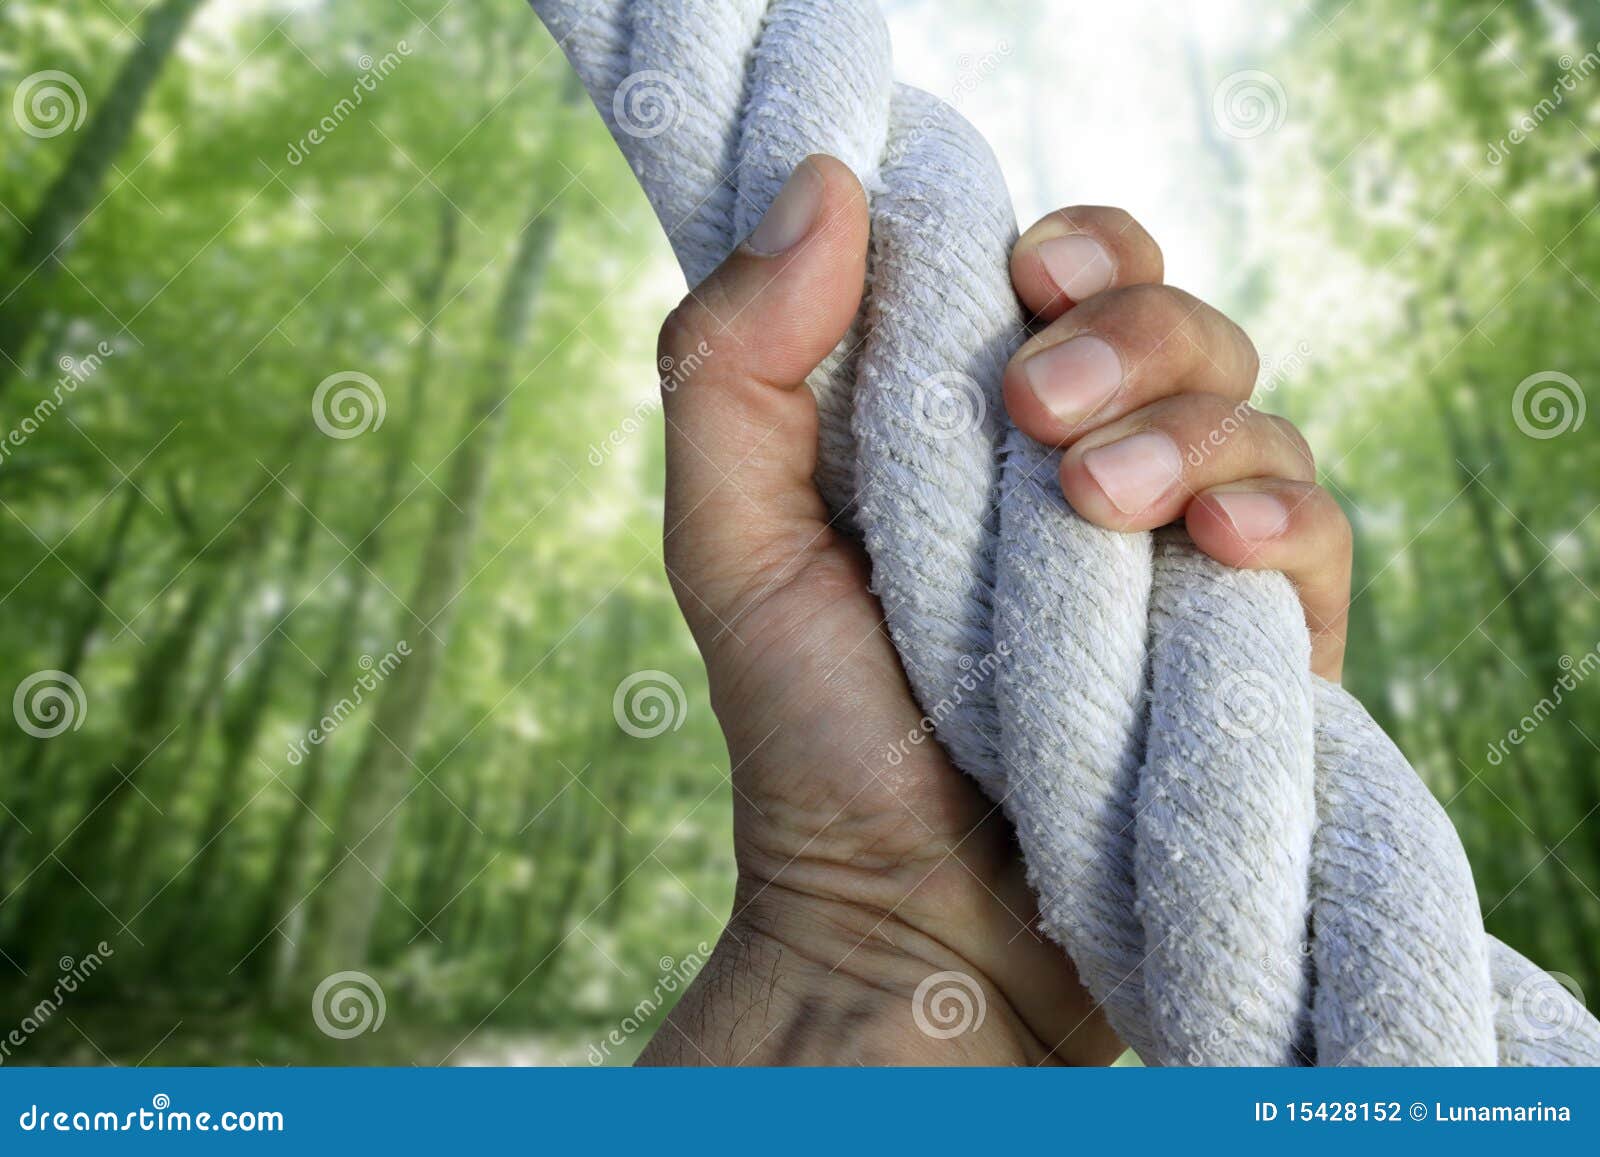 man hand grab grip climbing green forest rope